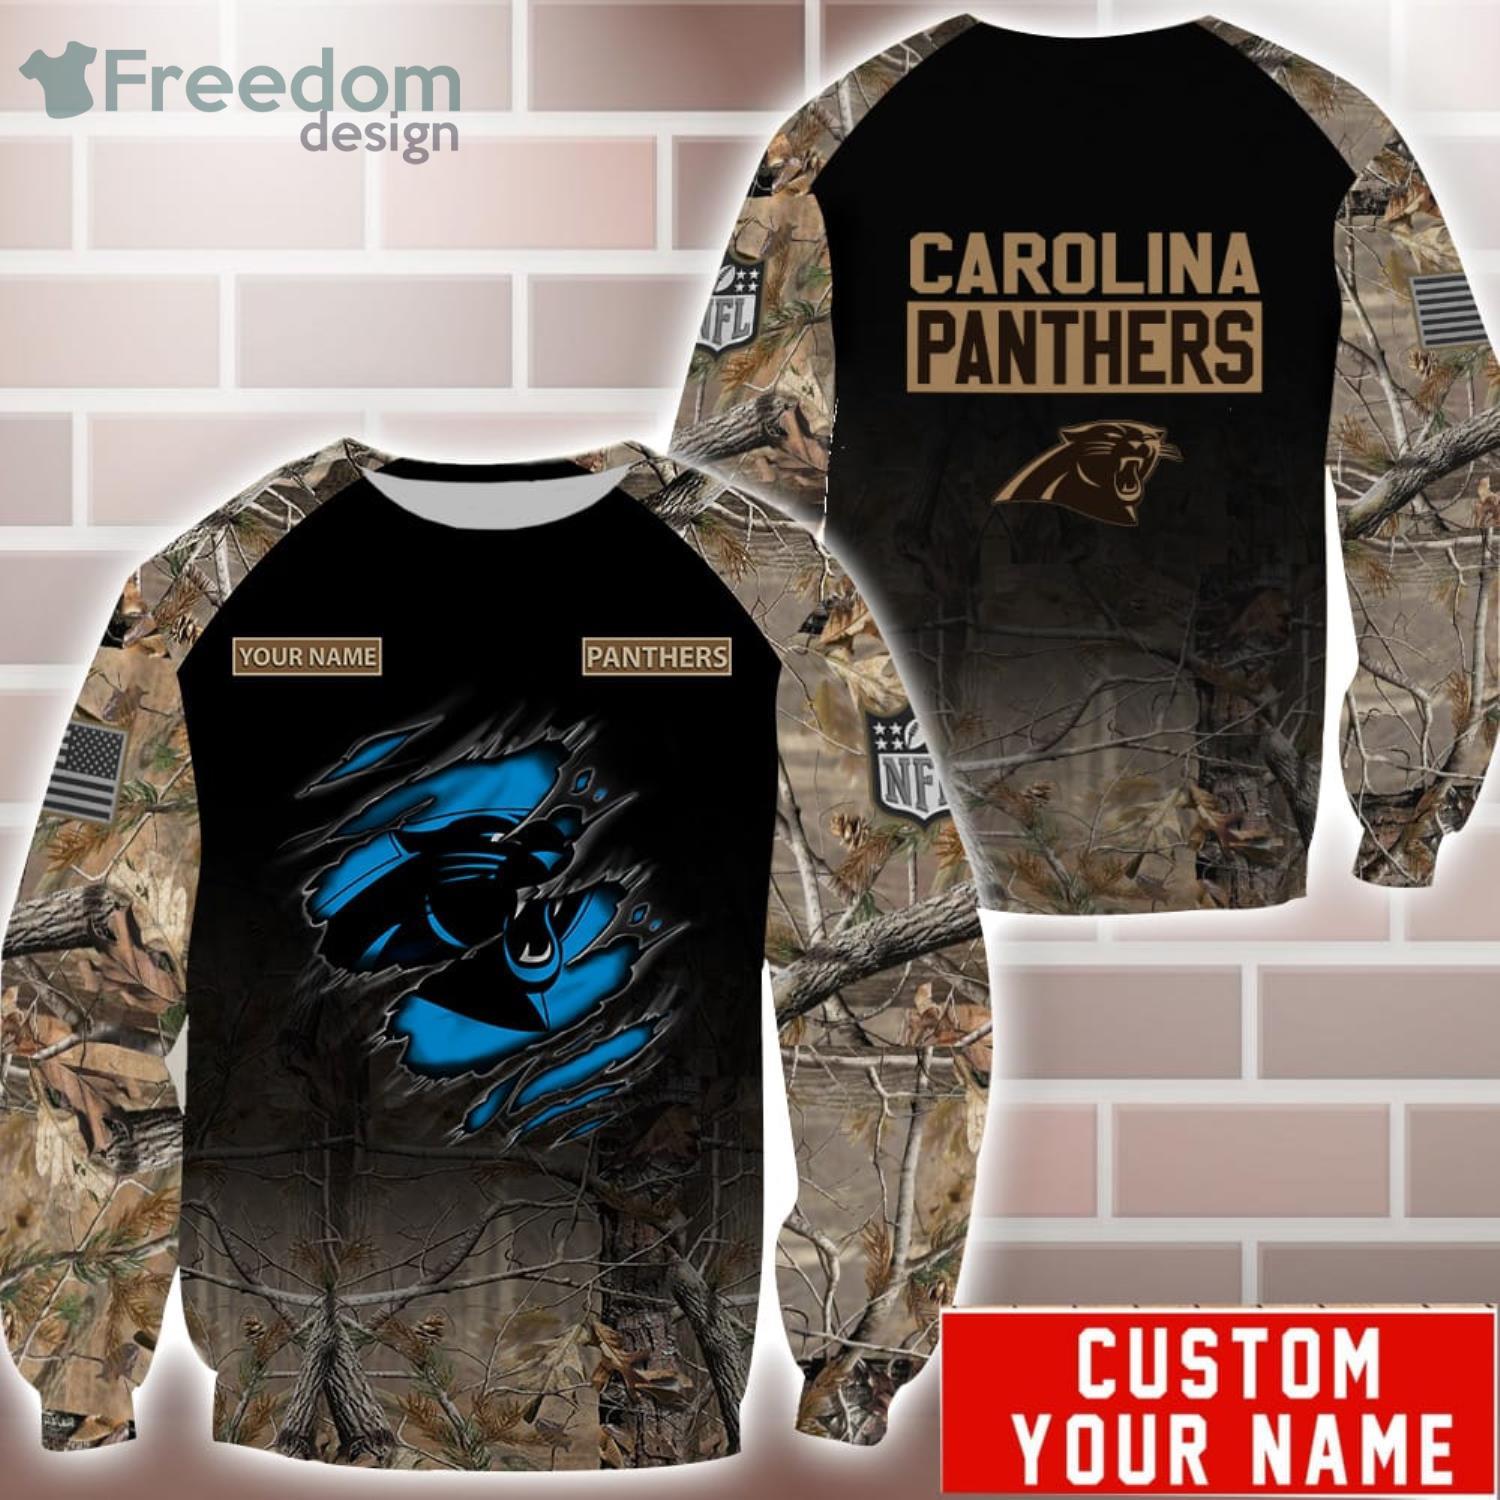 Carolina Panthers Personalized Hoodie Bg500  Personalized hoodies,  Carolina panthers, Hoodies